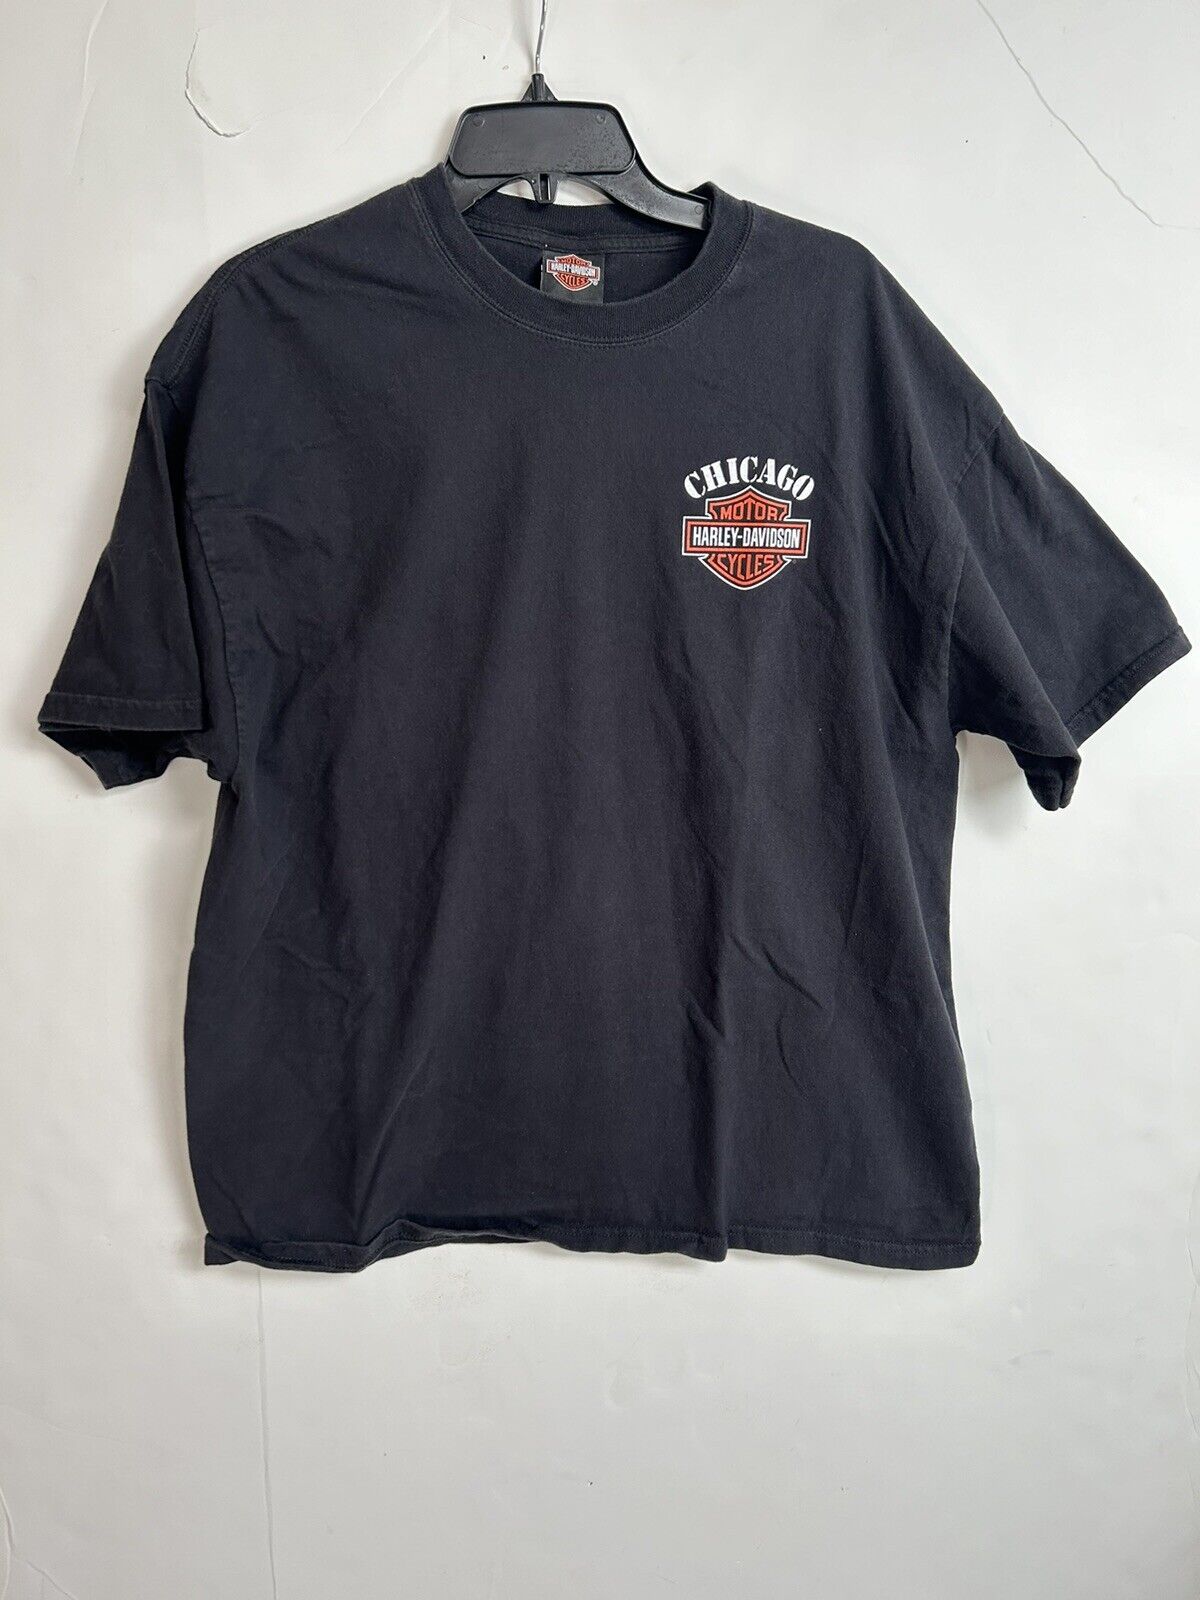 HARLEY DAVIDSON Chicago Shirt,XL,black,vintage,skyline